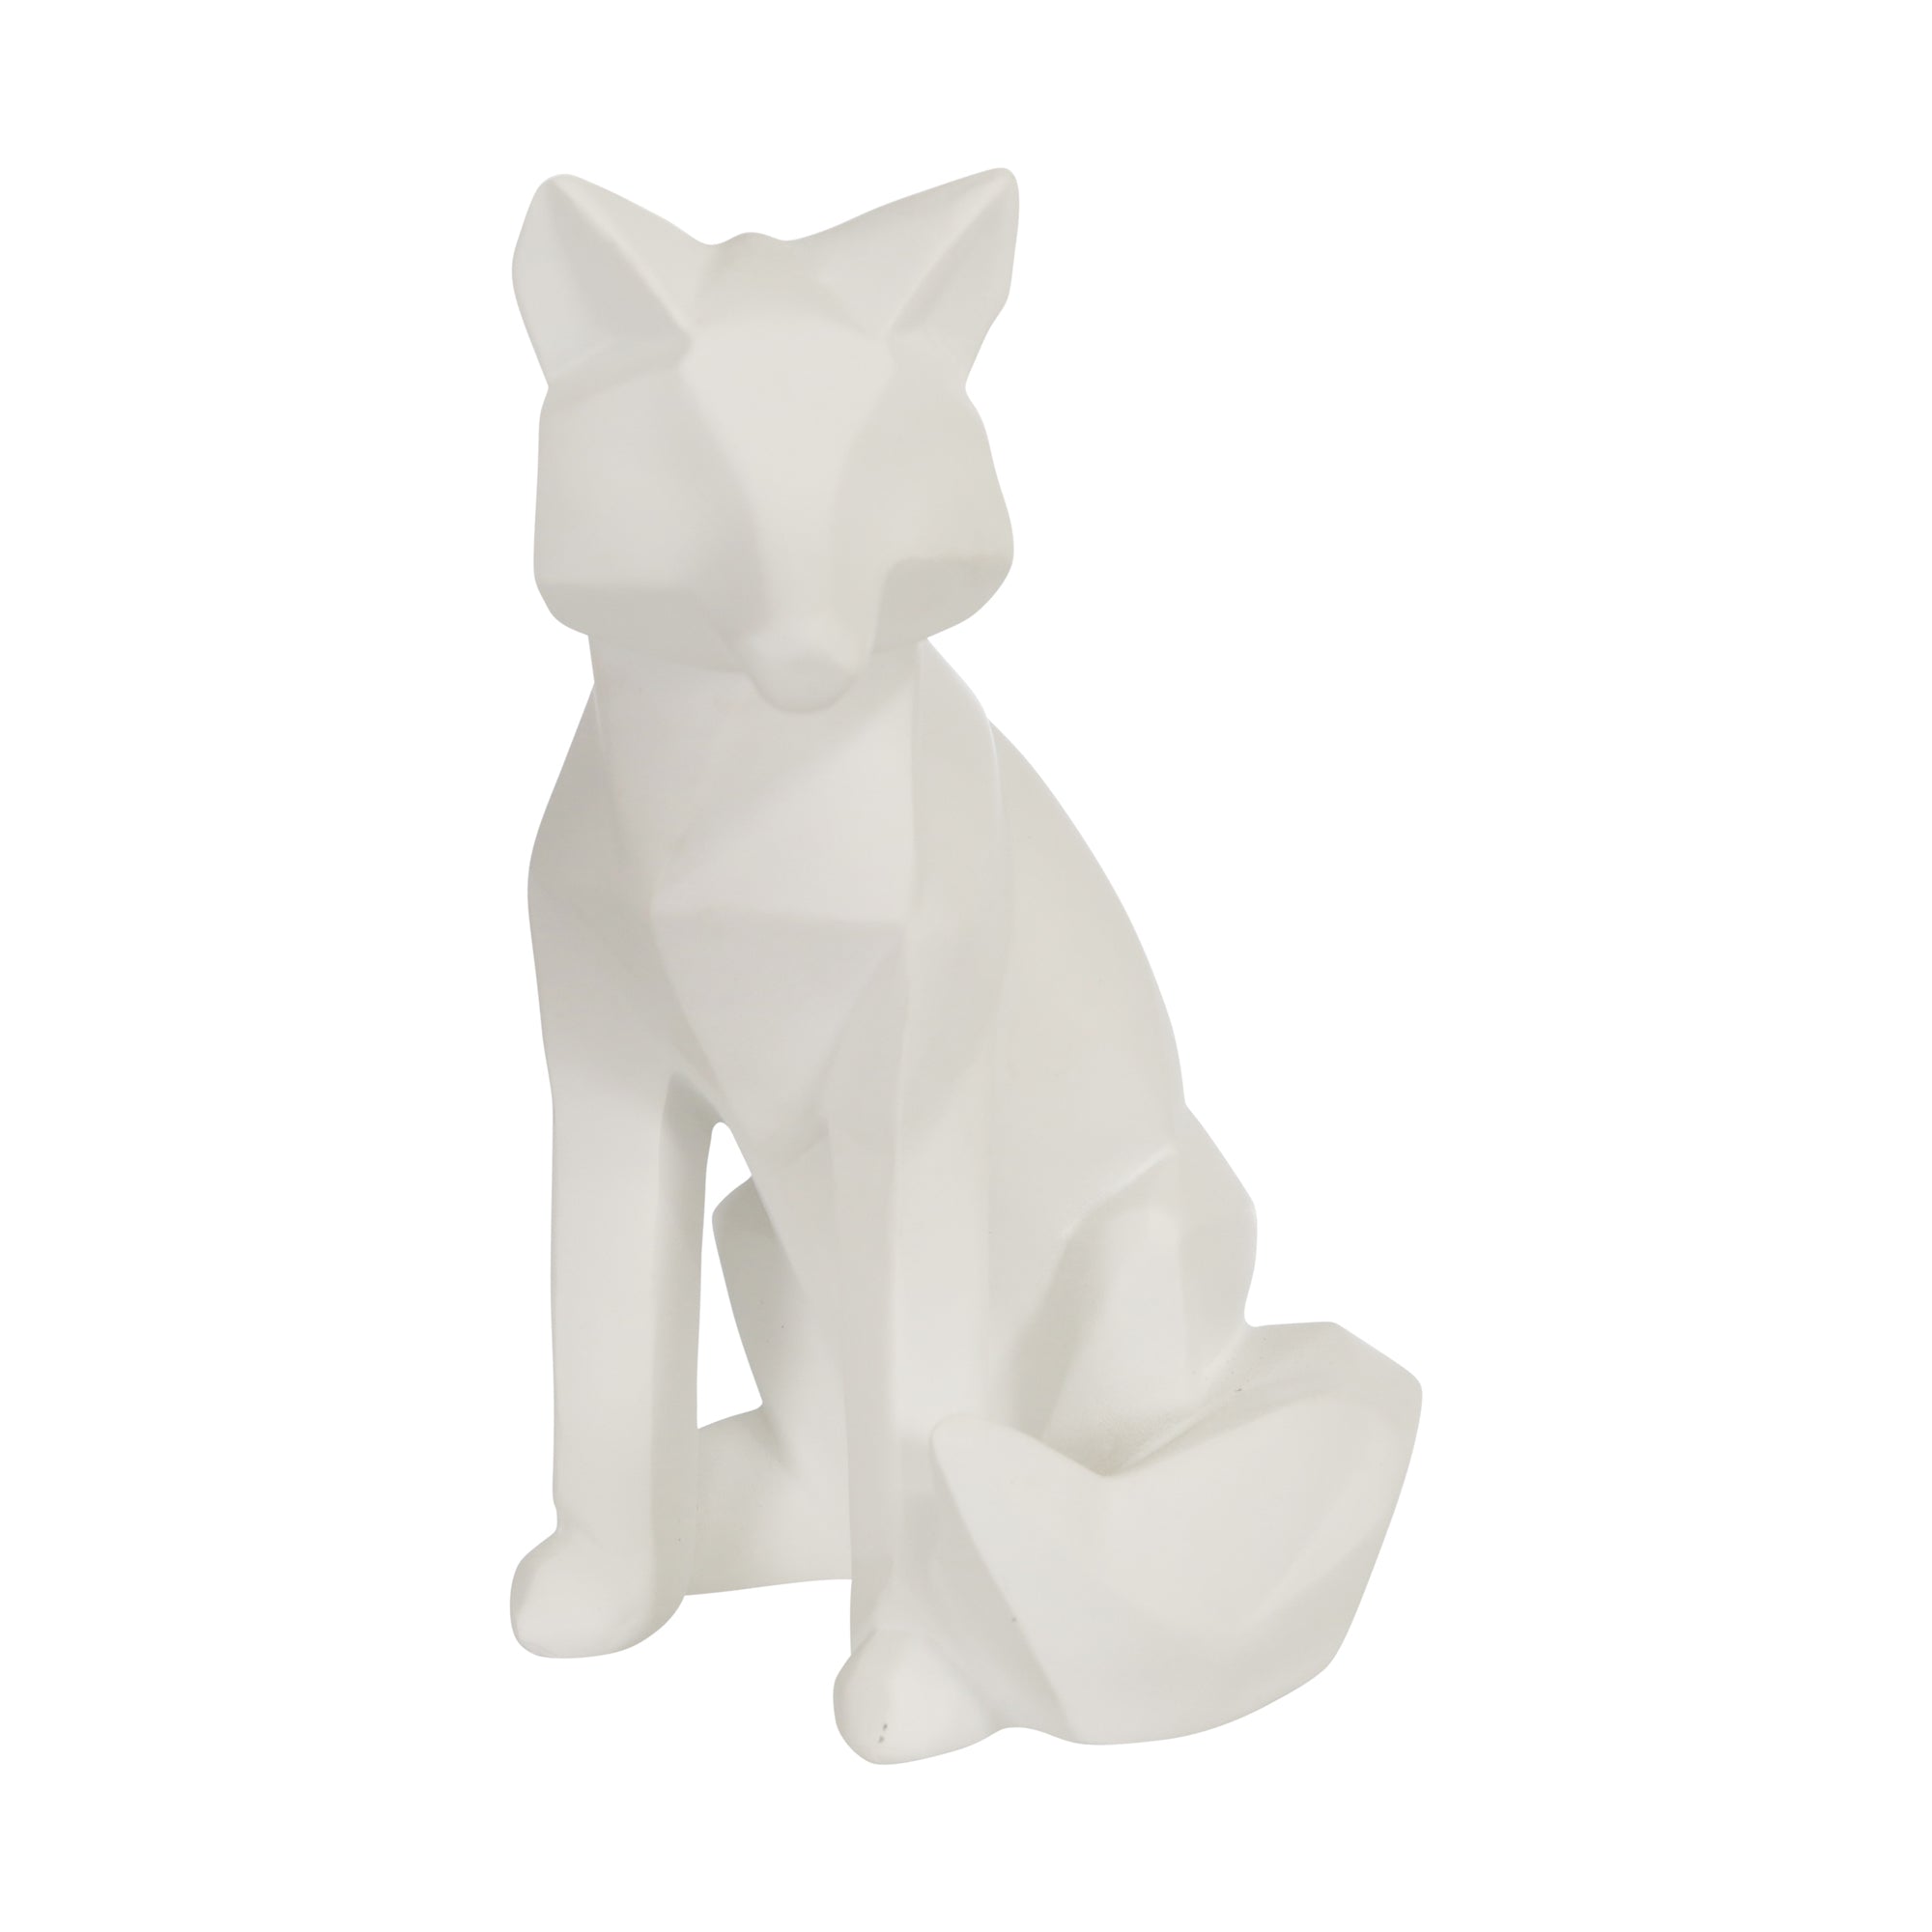 Polyresin 10" Fox Figurine, White